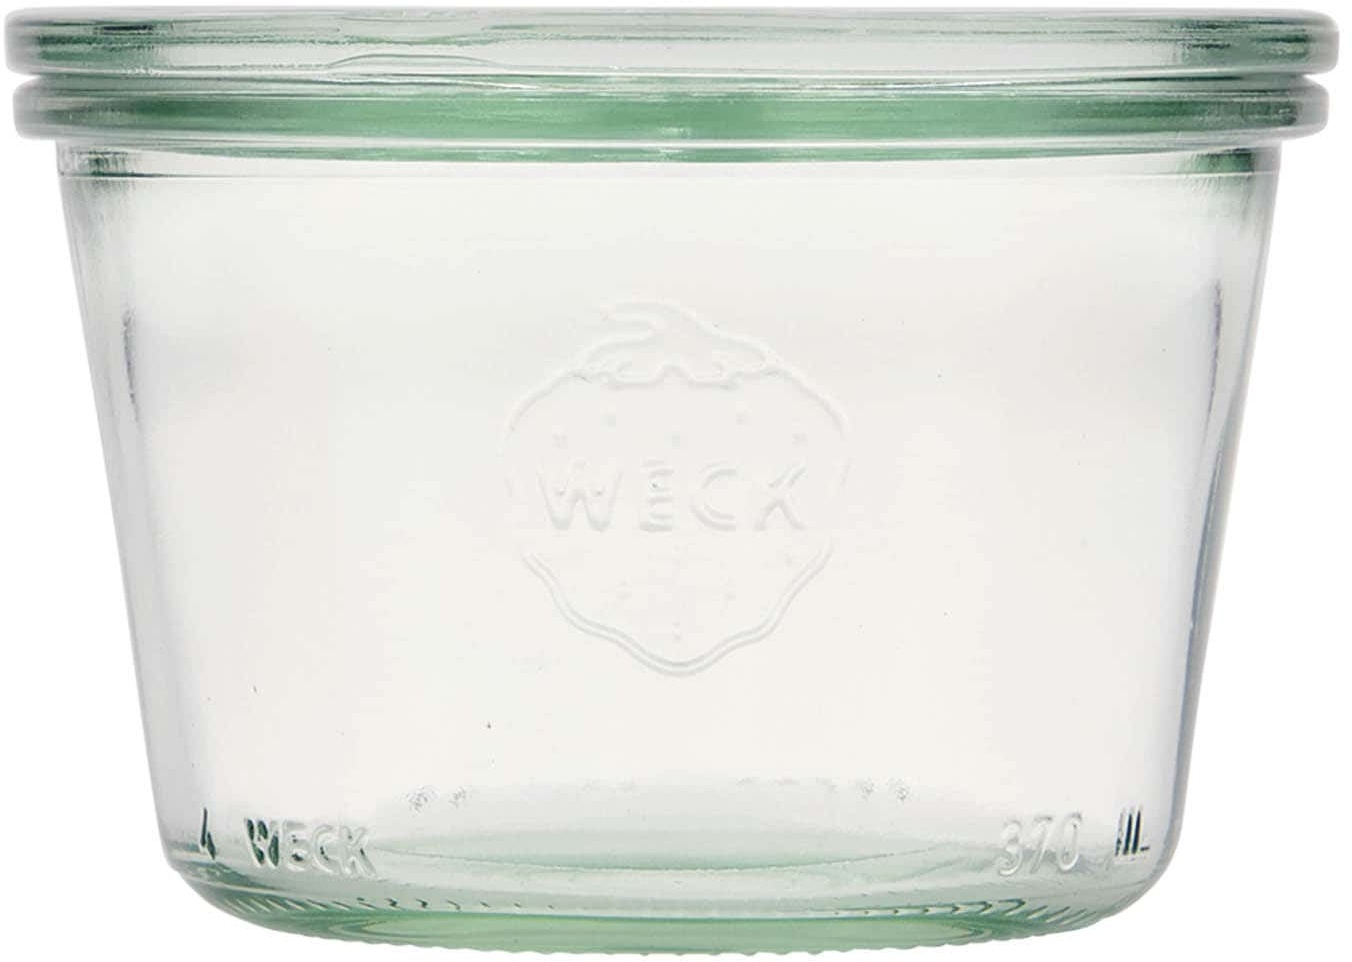 WECK-stortglas, 370 ml, monding: ronde rand